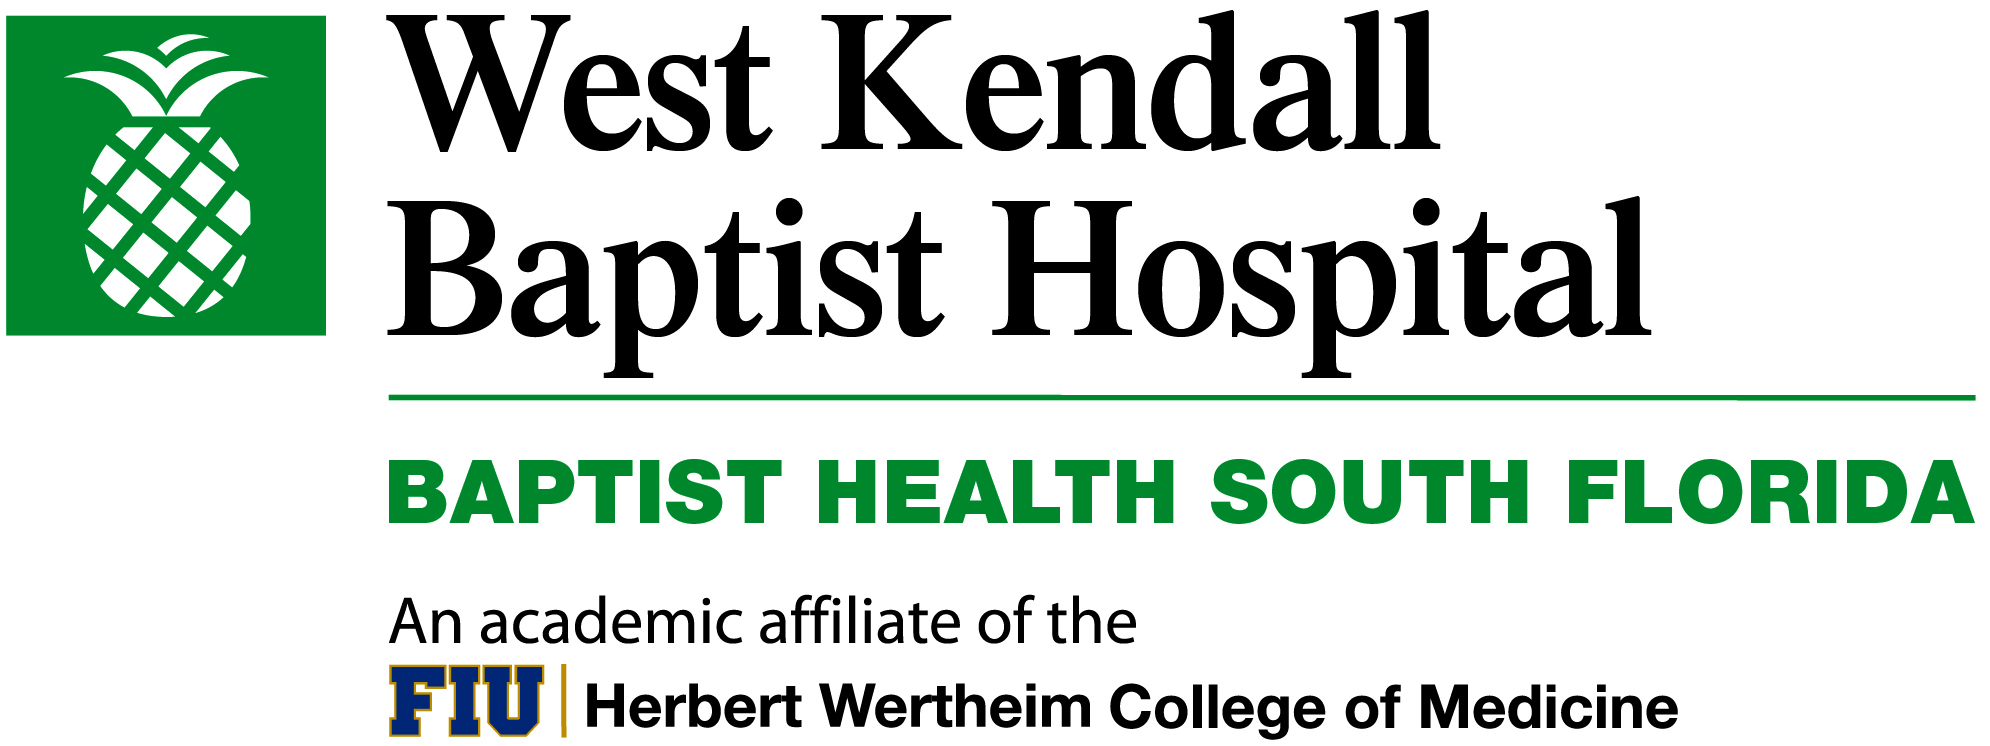 west kendall baptist hospital logo